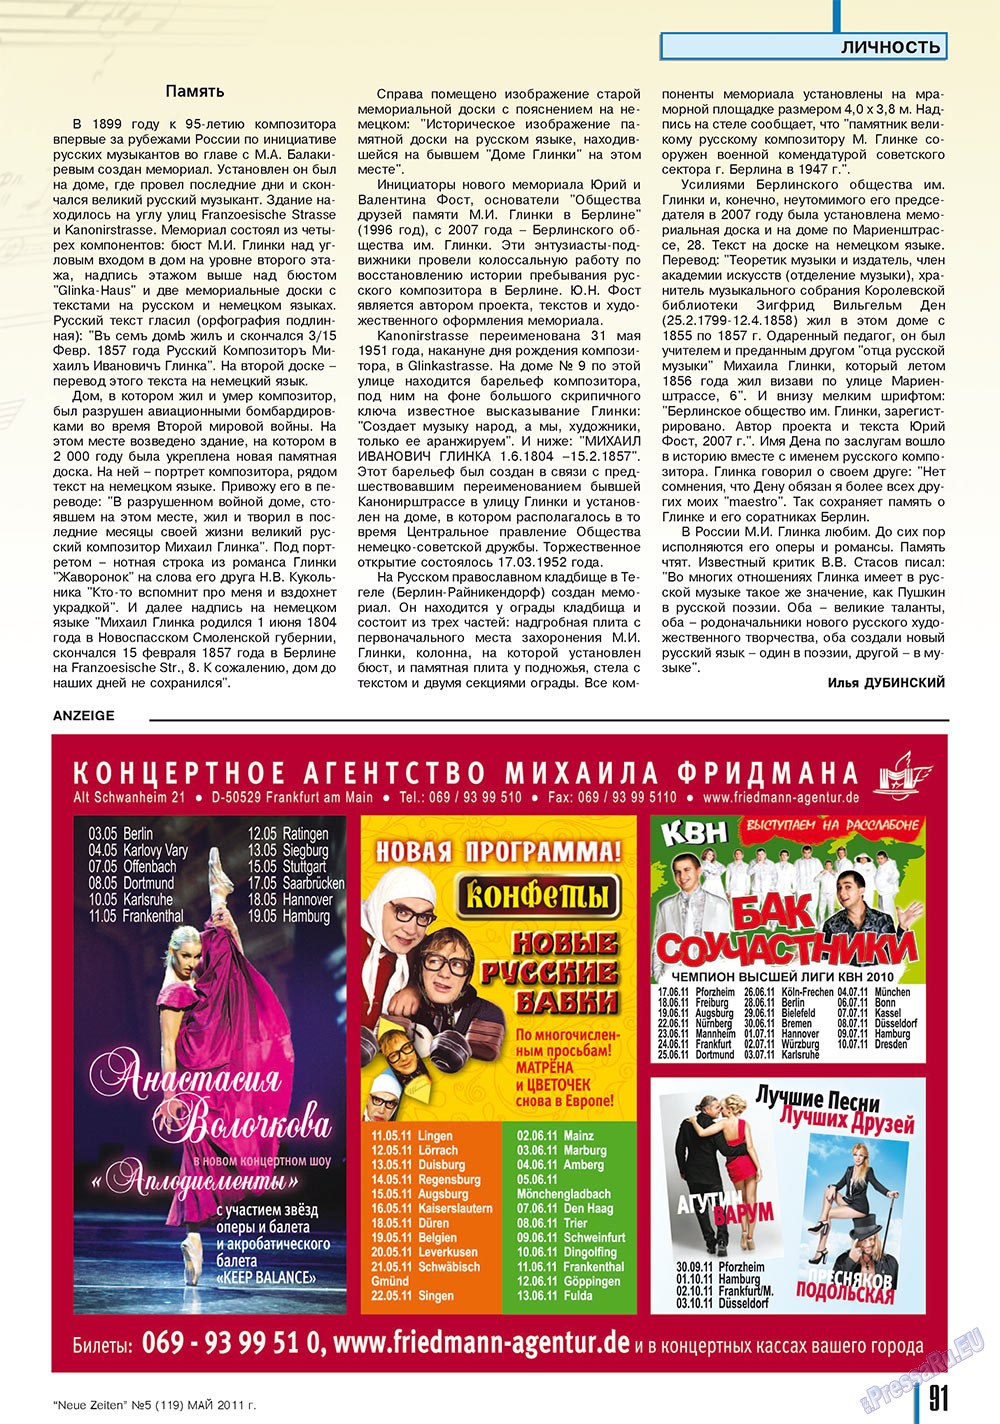 Neue Zeiten (журнал). 2011 год, номер 5, стр. 91